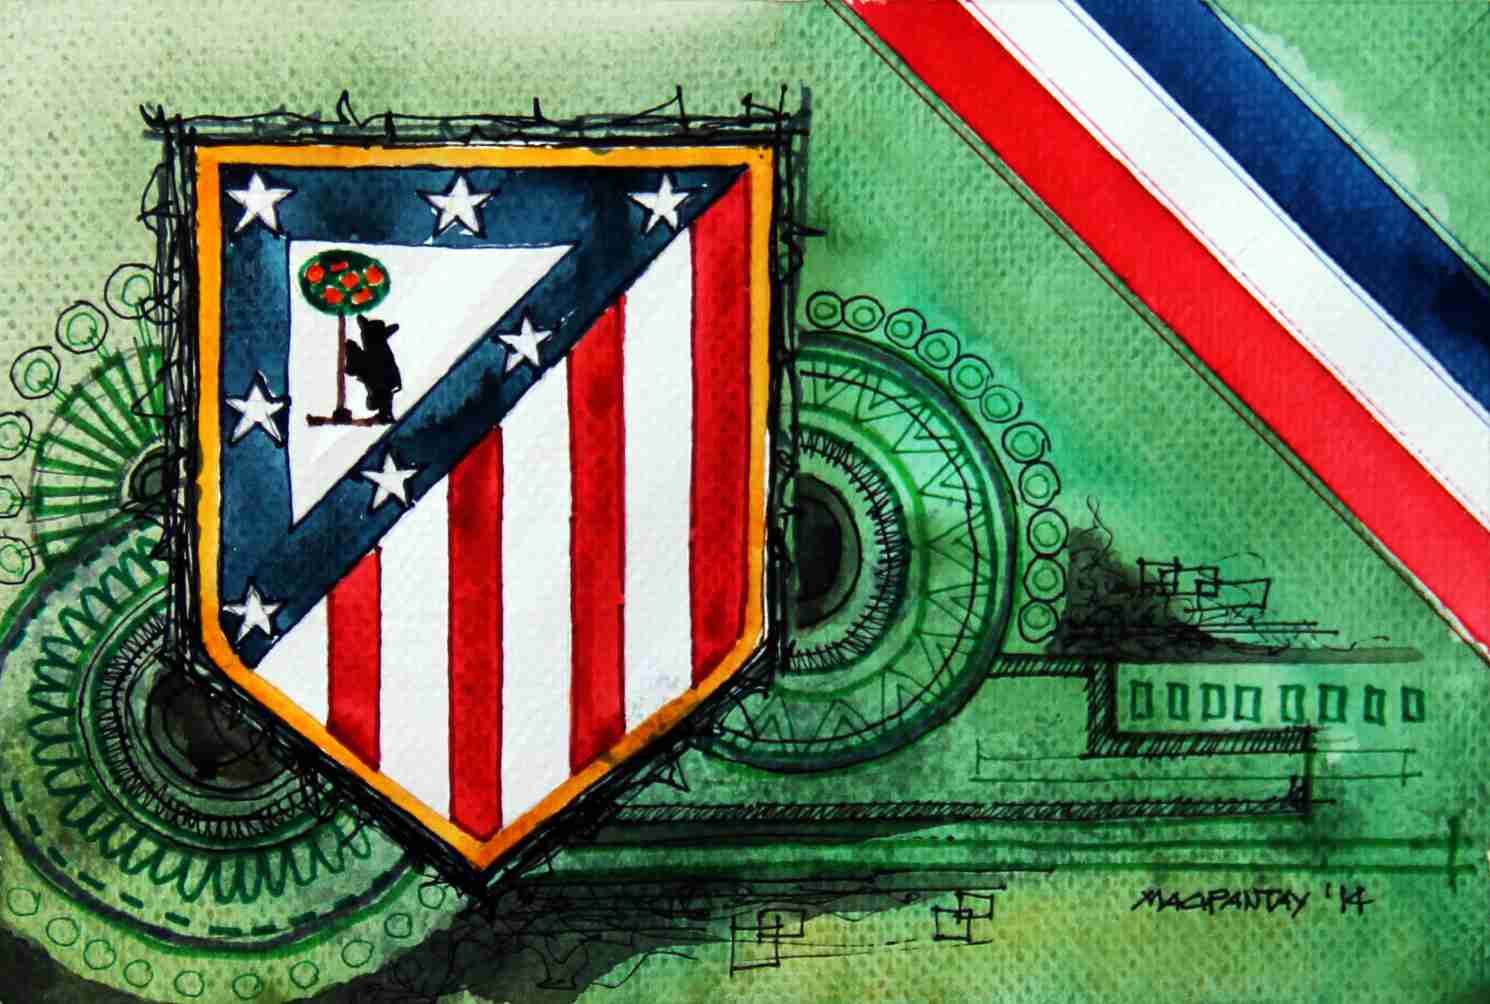 _Atletico Madrid - Wappen mit Farben